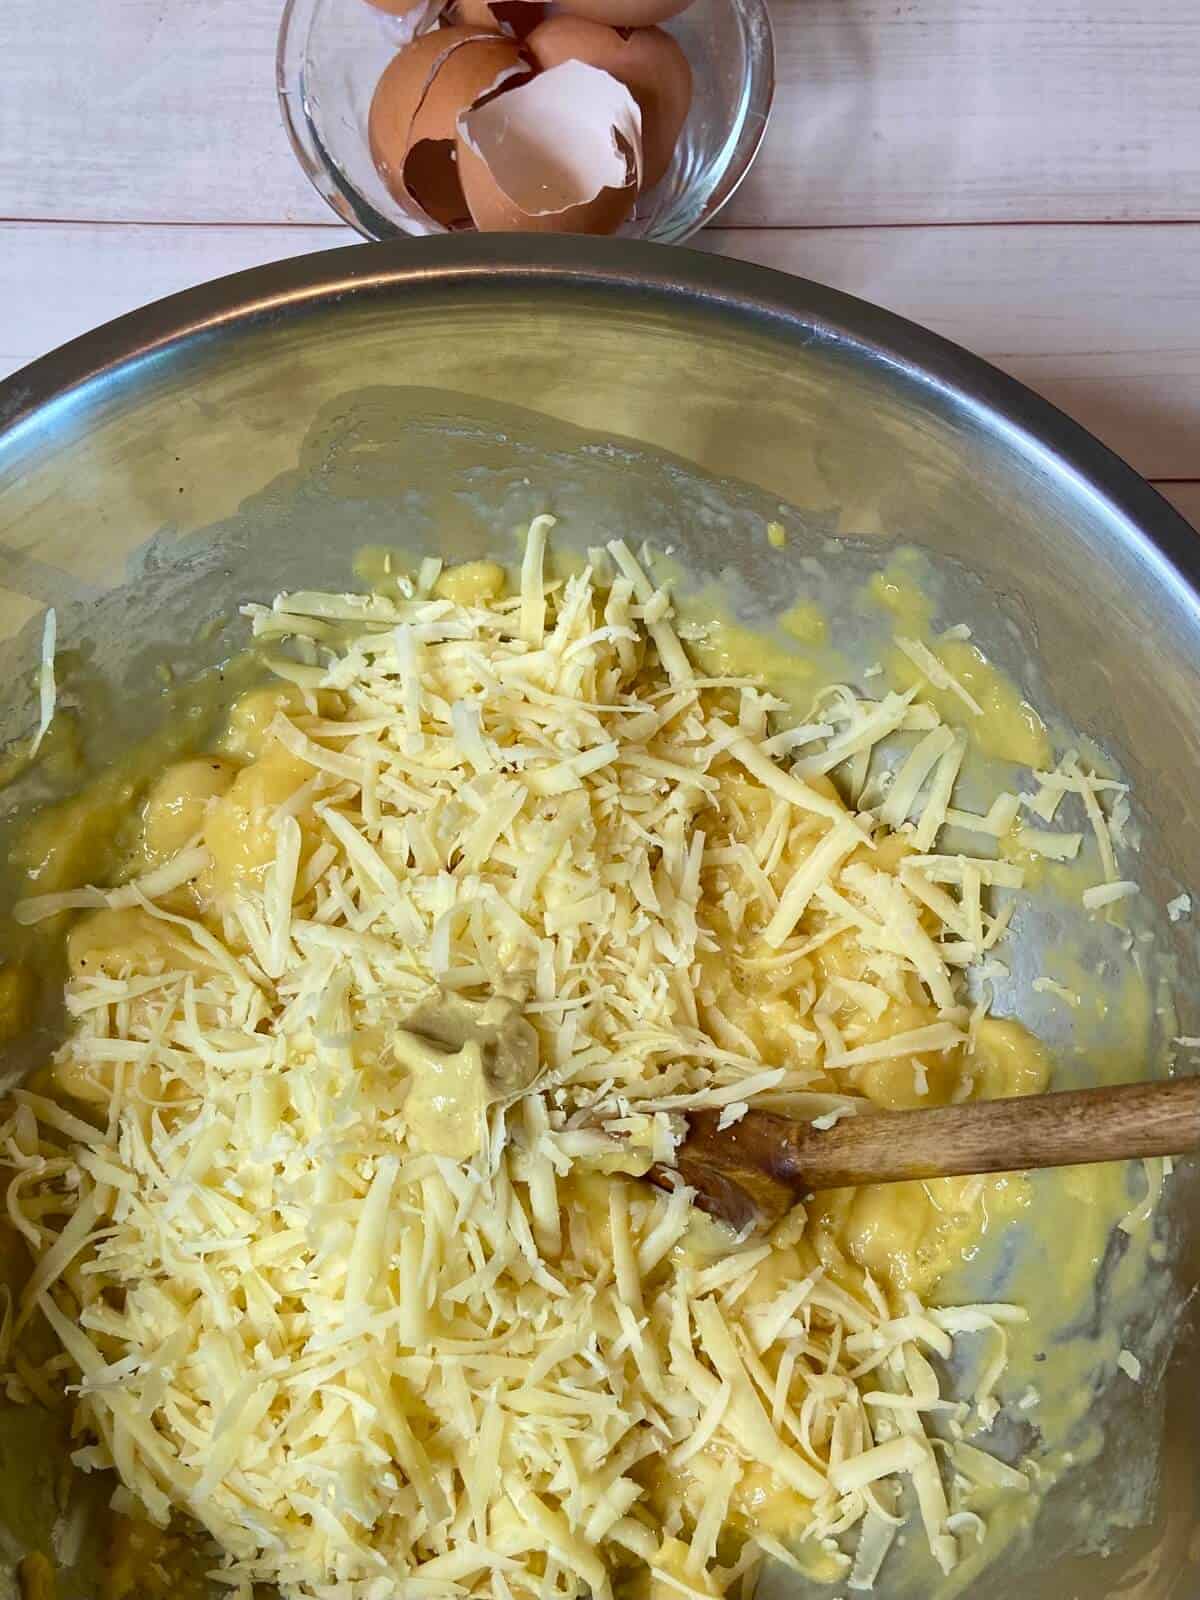 Add cheese and seasoning.